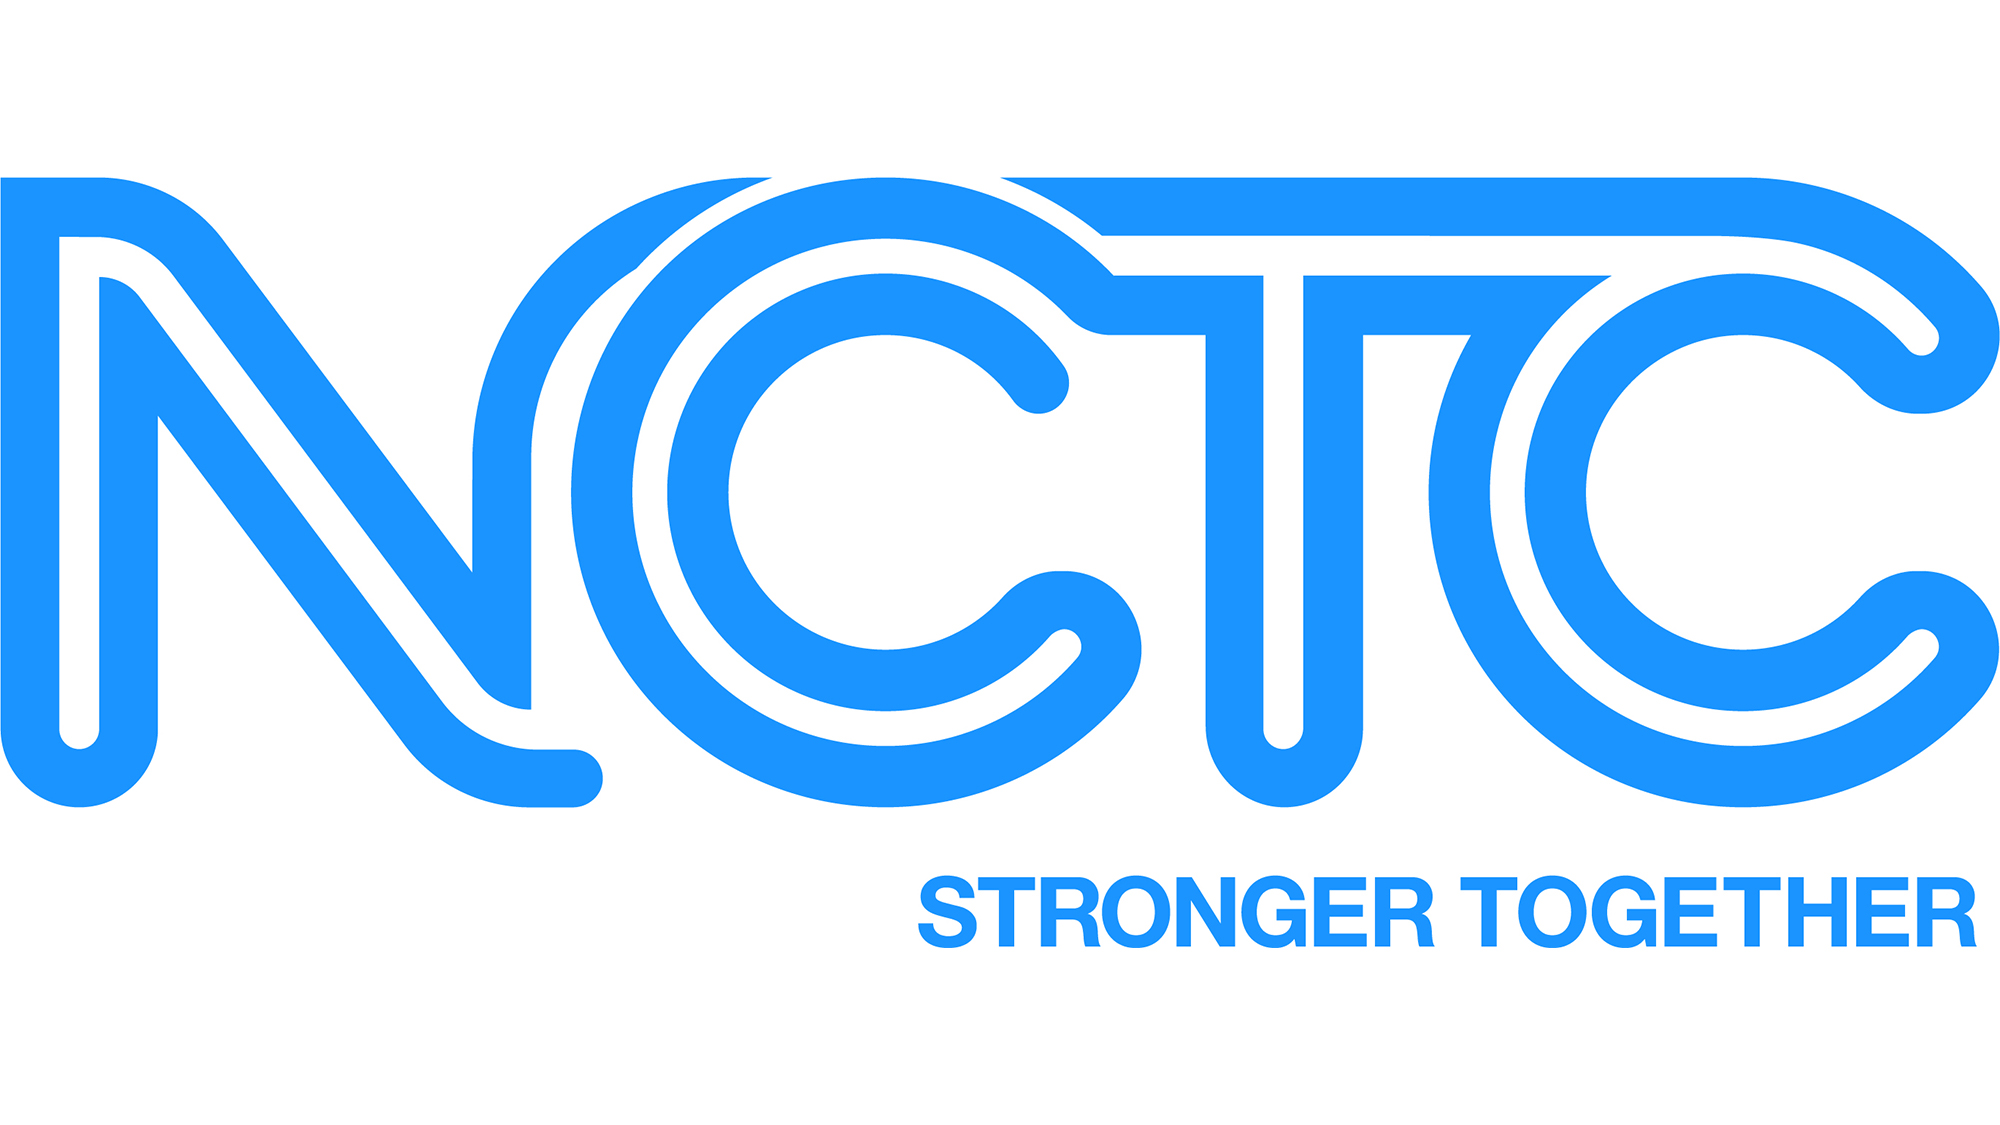 NCTC Announces New Name, Same Acronym Next TV